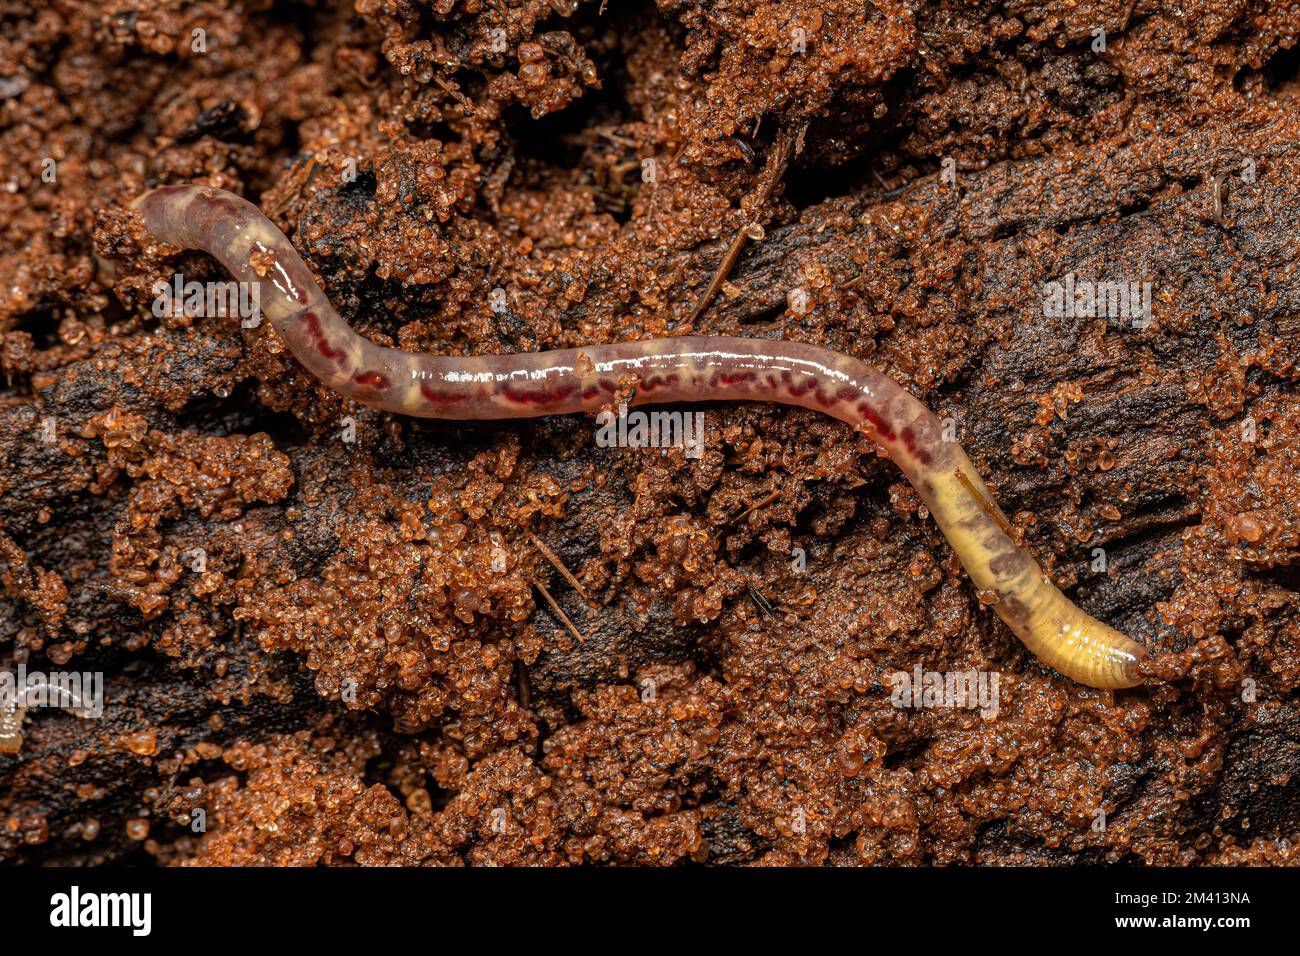 https://c8.alamy.com/comp/2M413NA/small-earthworm-arthropod-of-the-subclass-oligochaeta-2M413NA.jpg